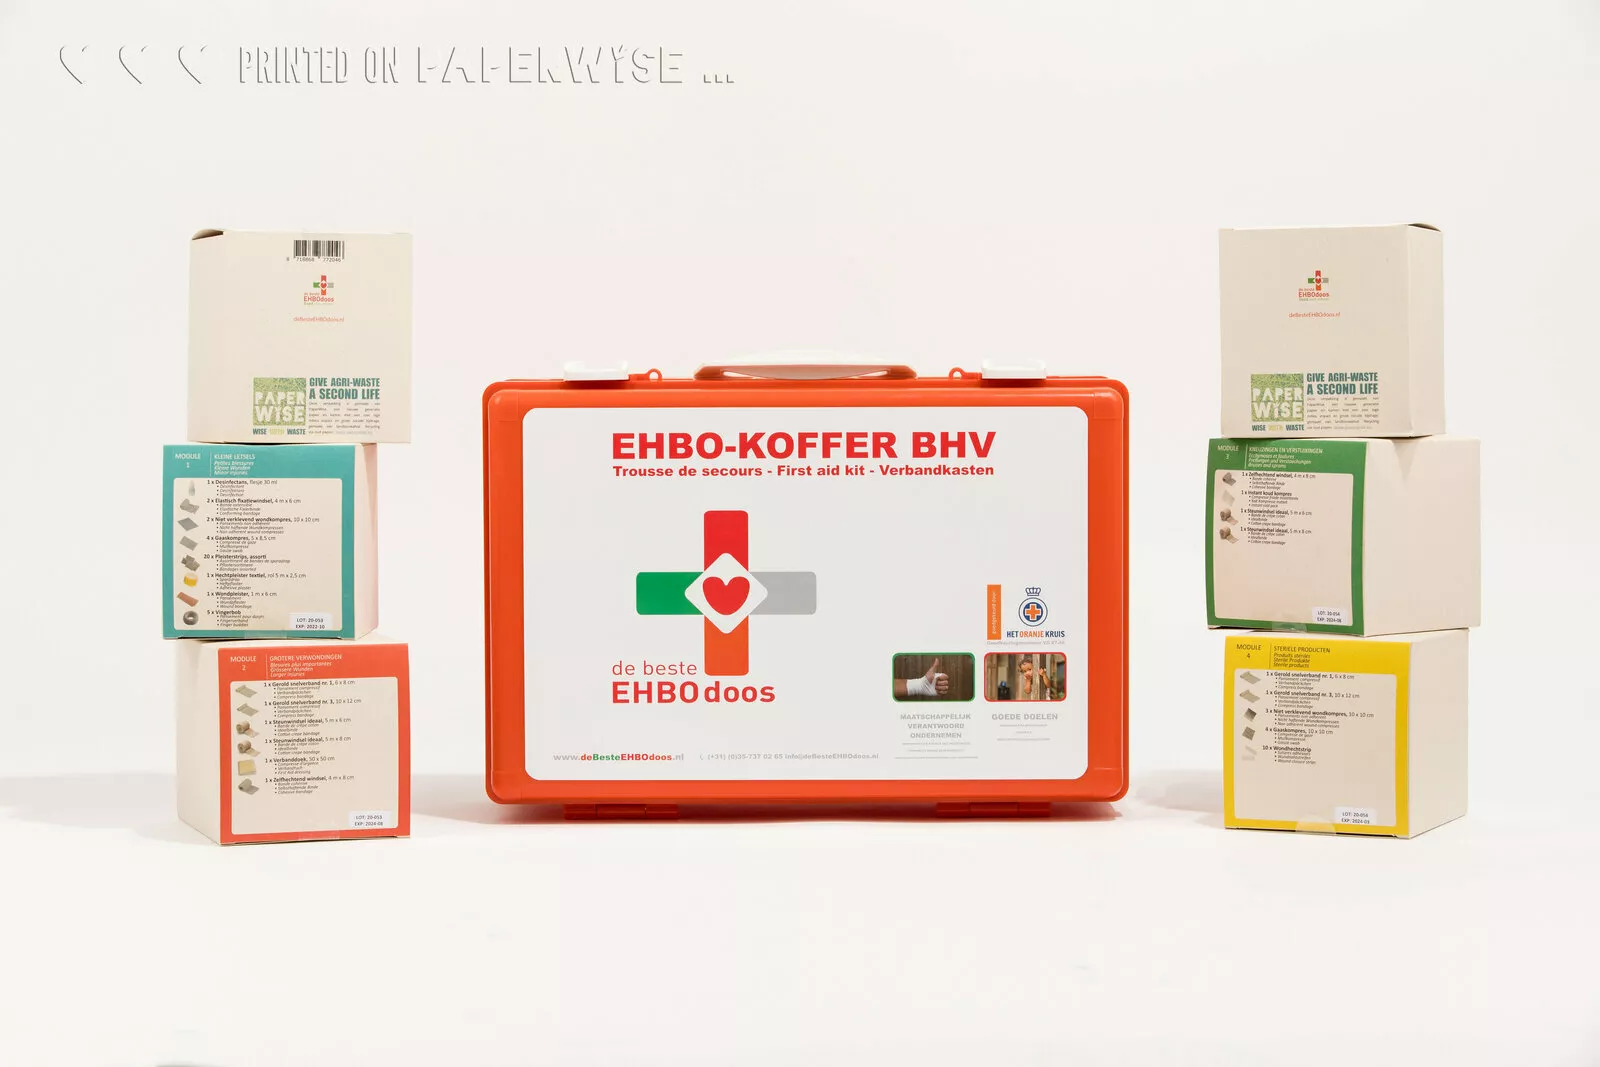 PaperWise environmentally friendly paper board packaging firstaidbox renewable resources DeBesteEHBODoos4